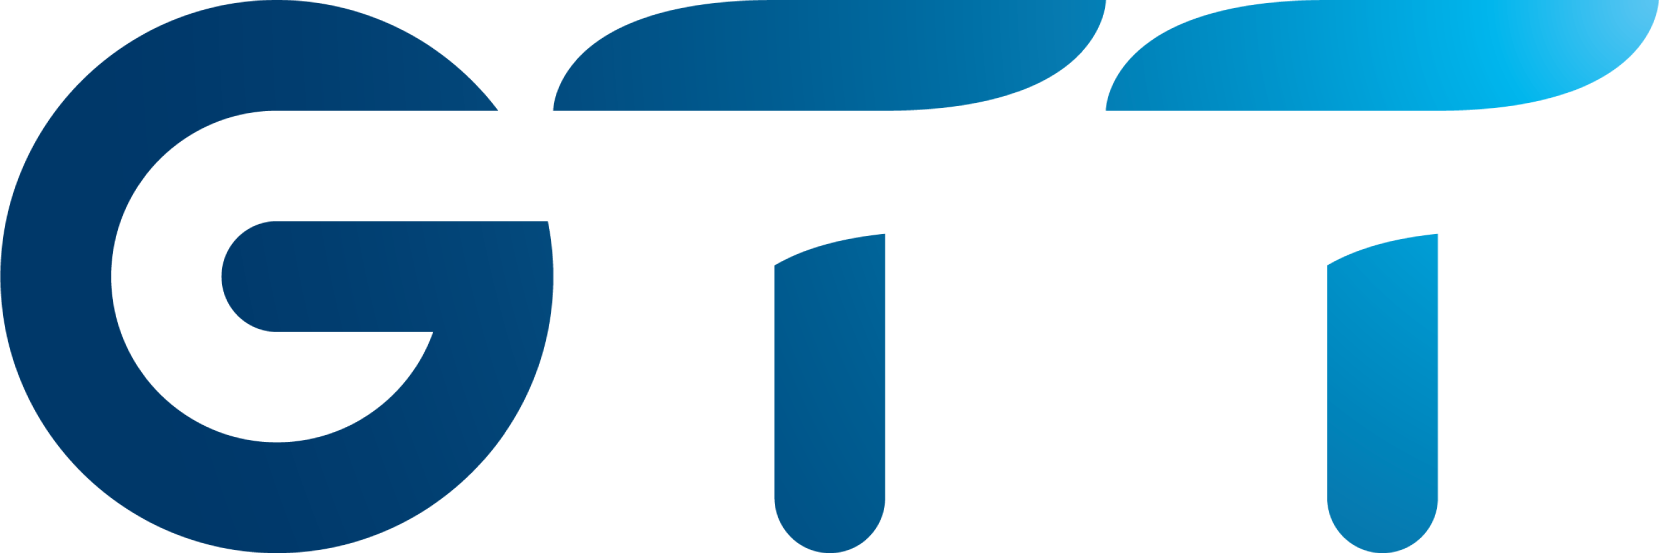 Gaztransport & Technigaz logo (PNG transparent)